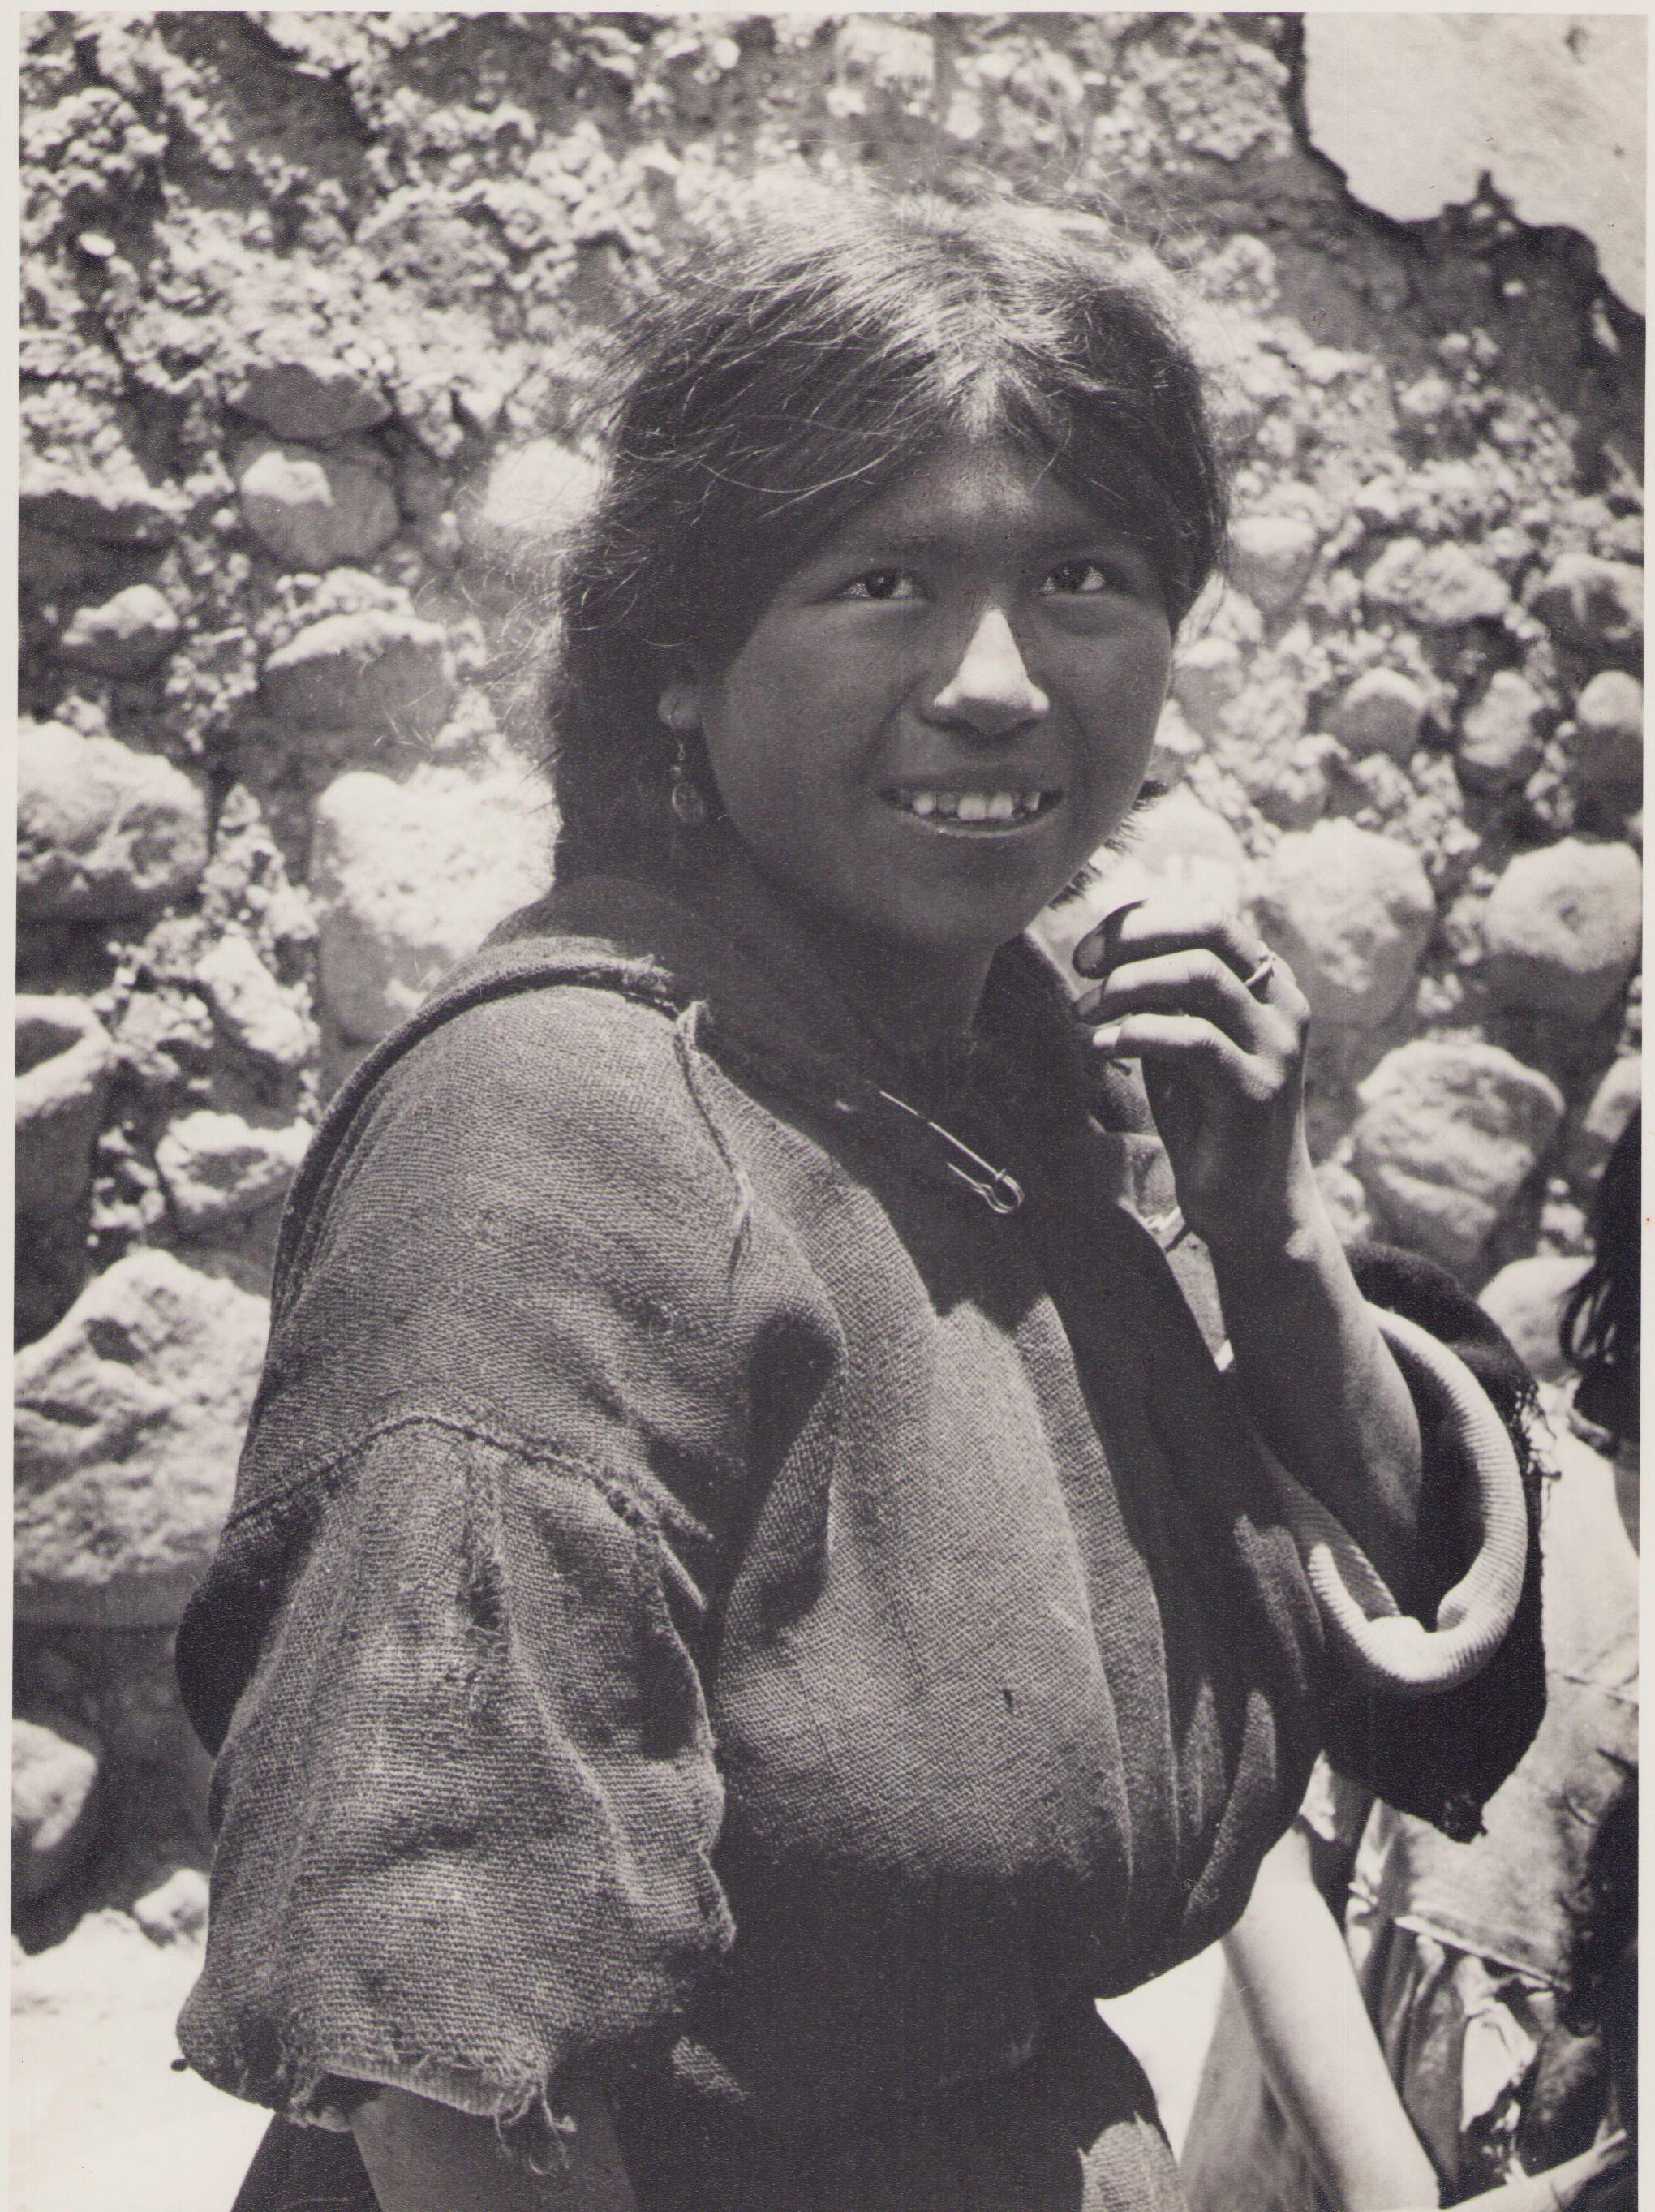 Bolivia, Potosí, Girl, Black and White Photography, 1960s, 23.4 x 17.4 cm